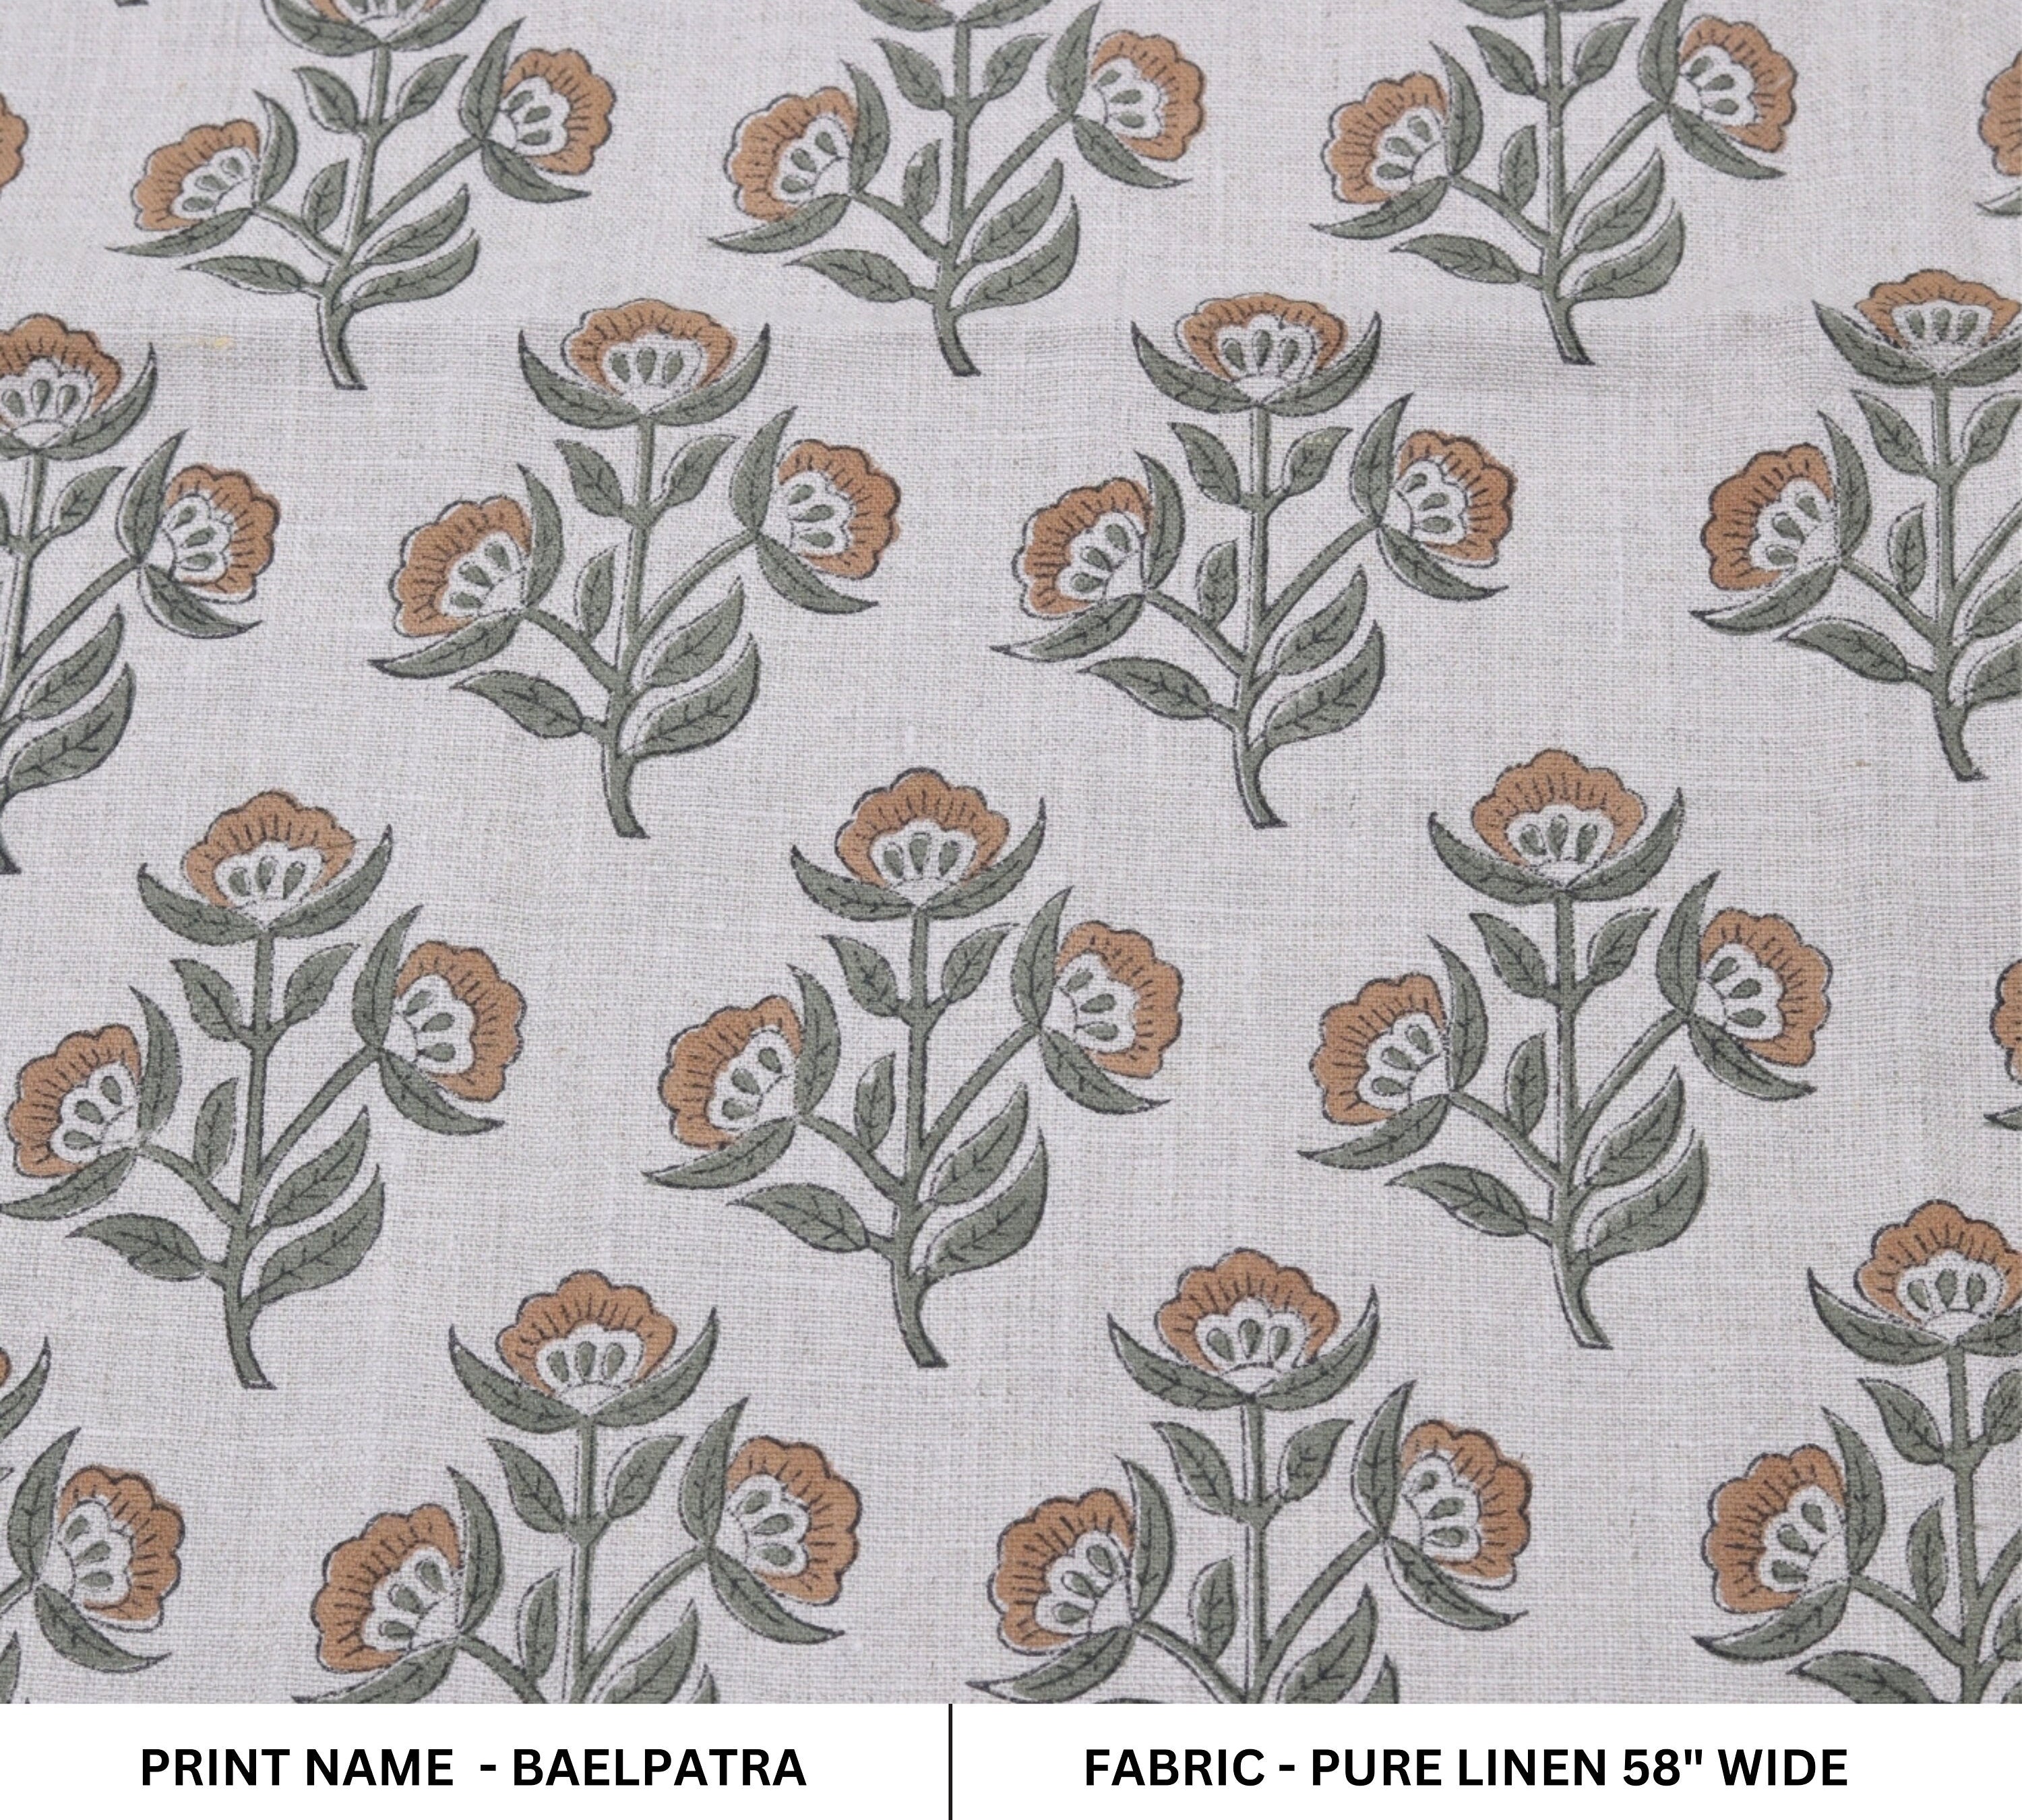 Floral curtain fabric pure linen hand block print pillowcase, napkins, upholstery linen for drapery - BAELPATRA